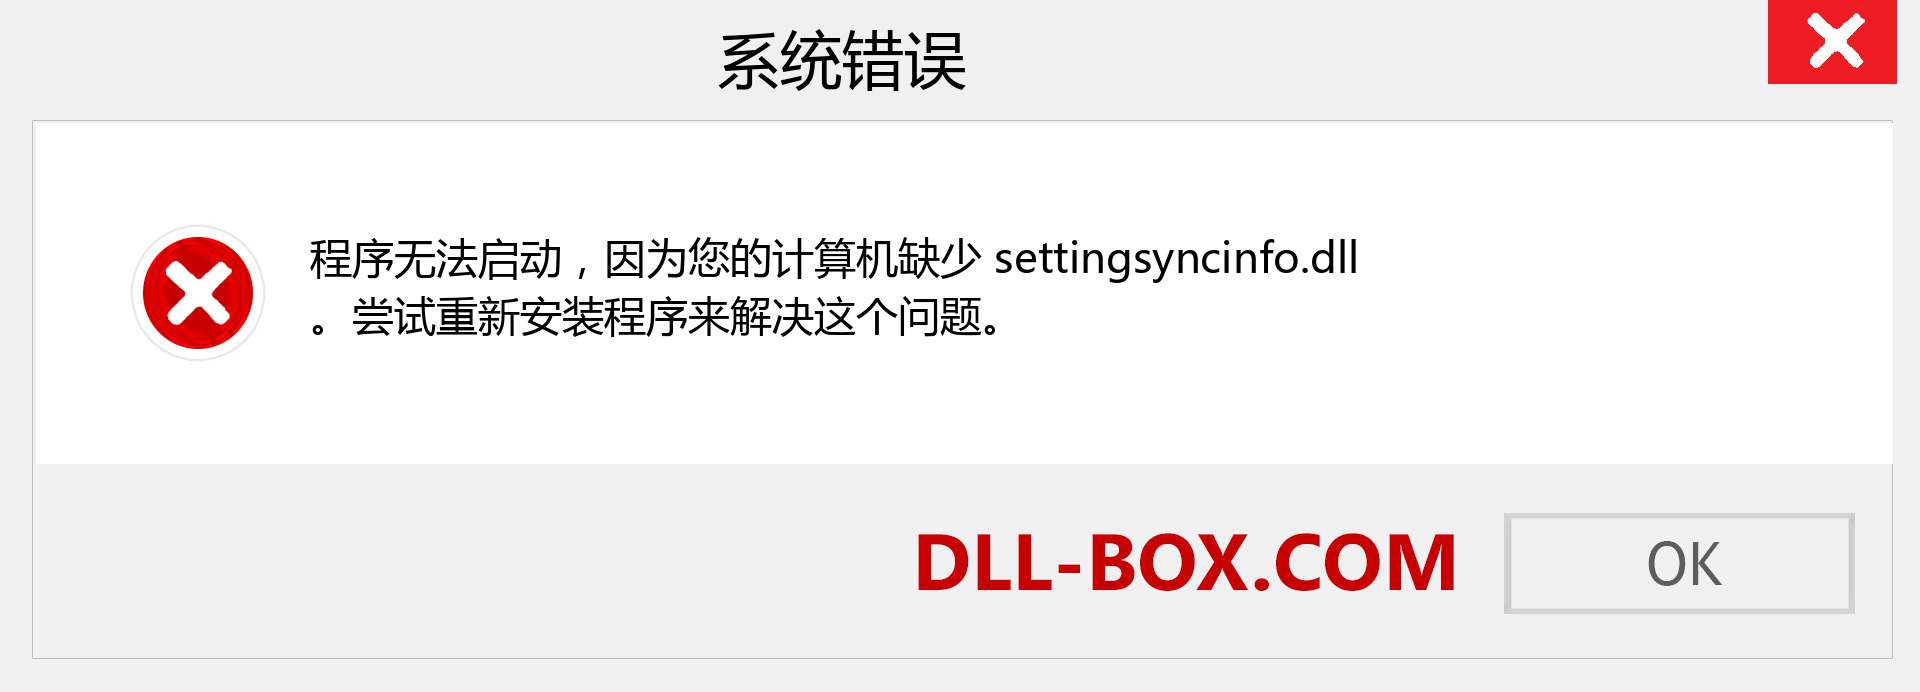 settingsyncinfo.dll 文件丢失？。 适用于 Windows 7、8、10 的下载 - 修复 Windows、照片、图像上的 settingsyncinfo dll 丢失错误